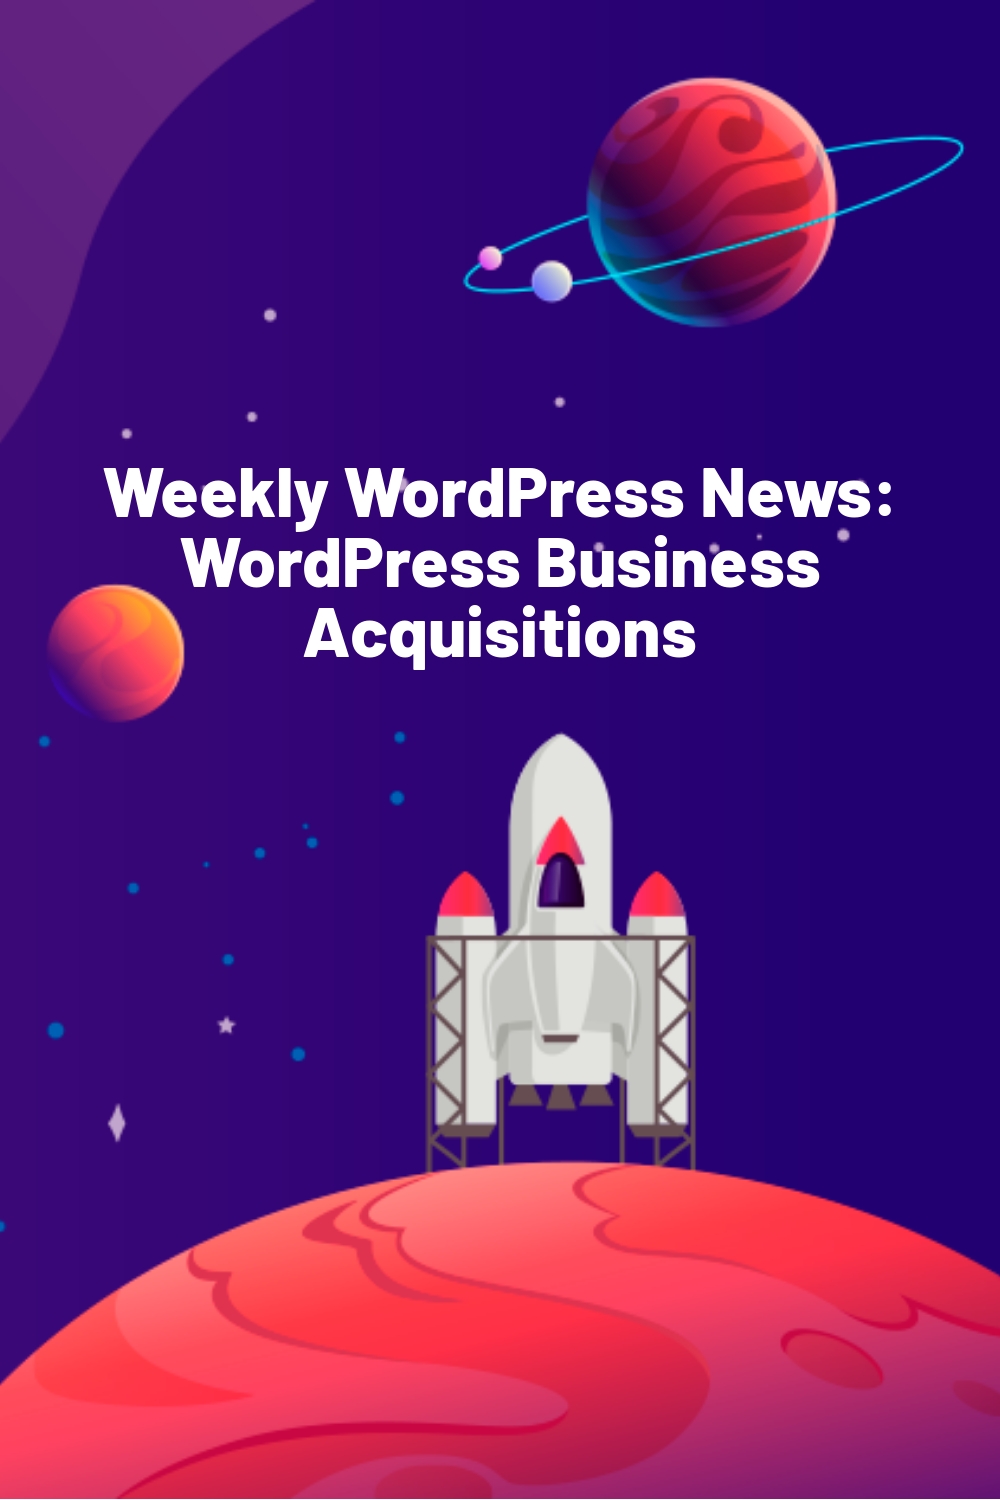 Weekly WordPress News: WordPress Business Acquisitions